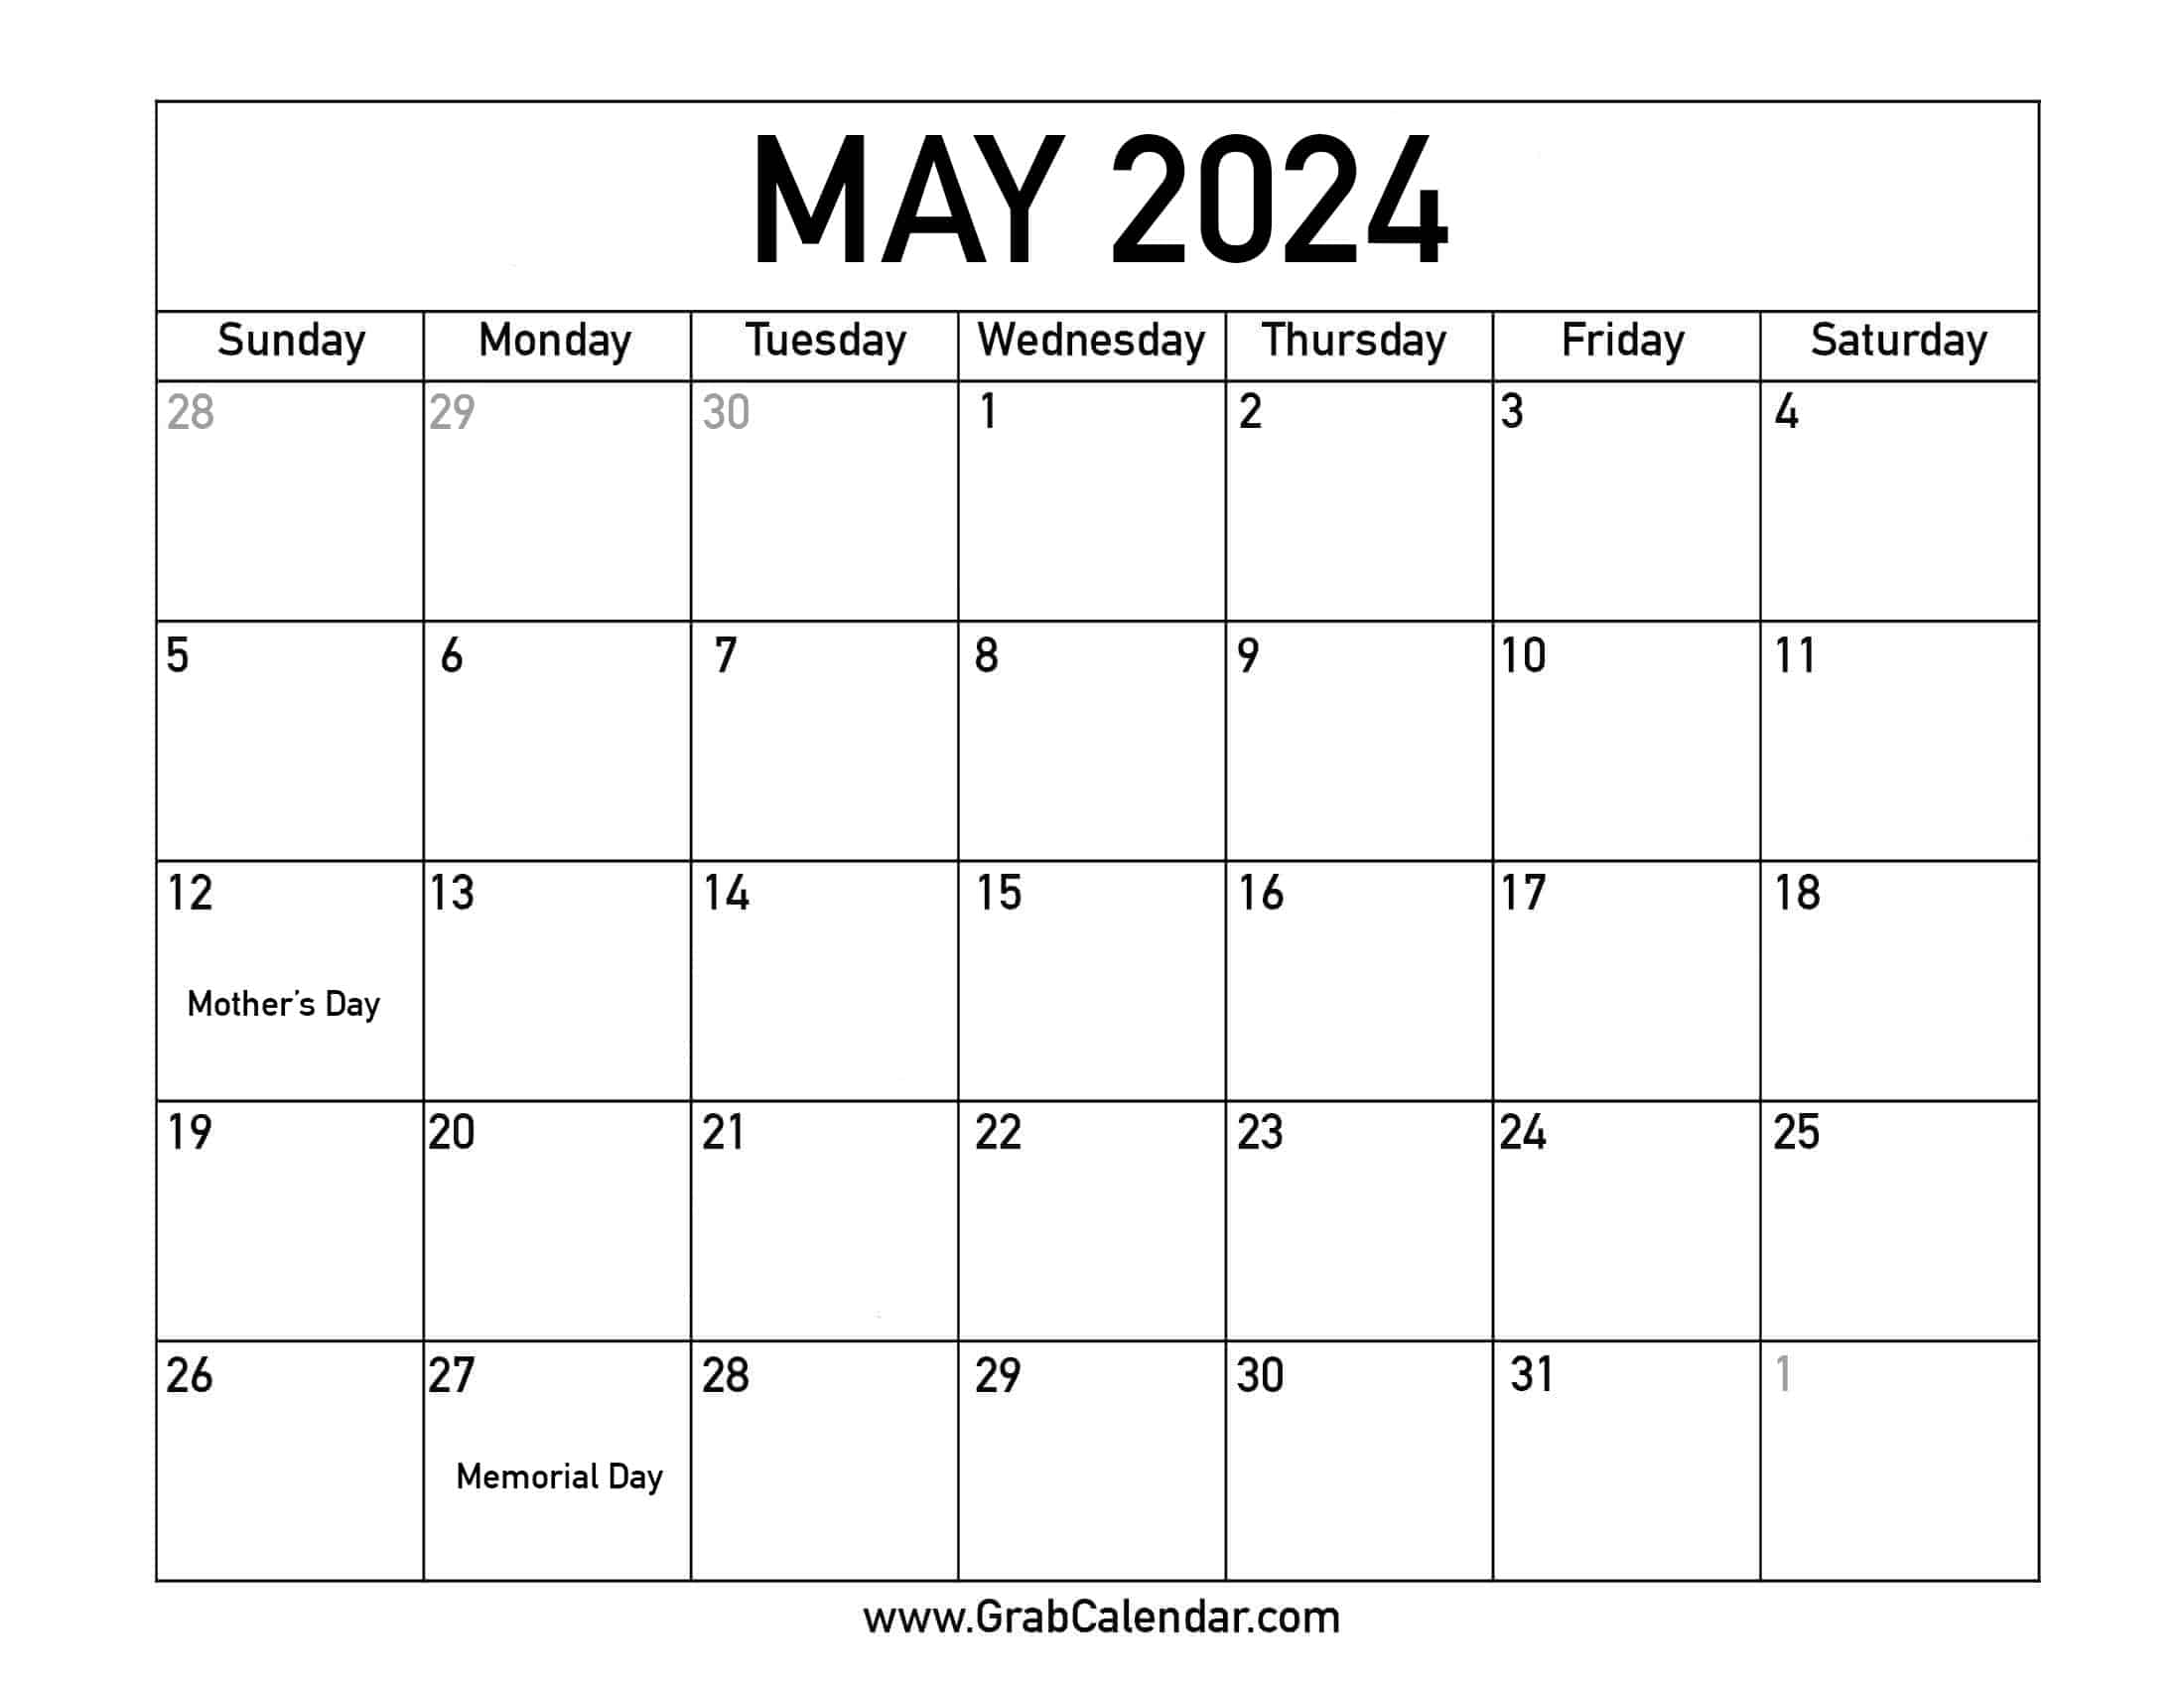 May Calendar 2024 By Day Carla Cosette